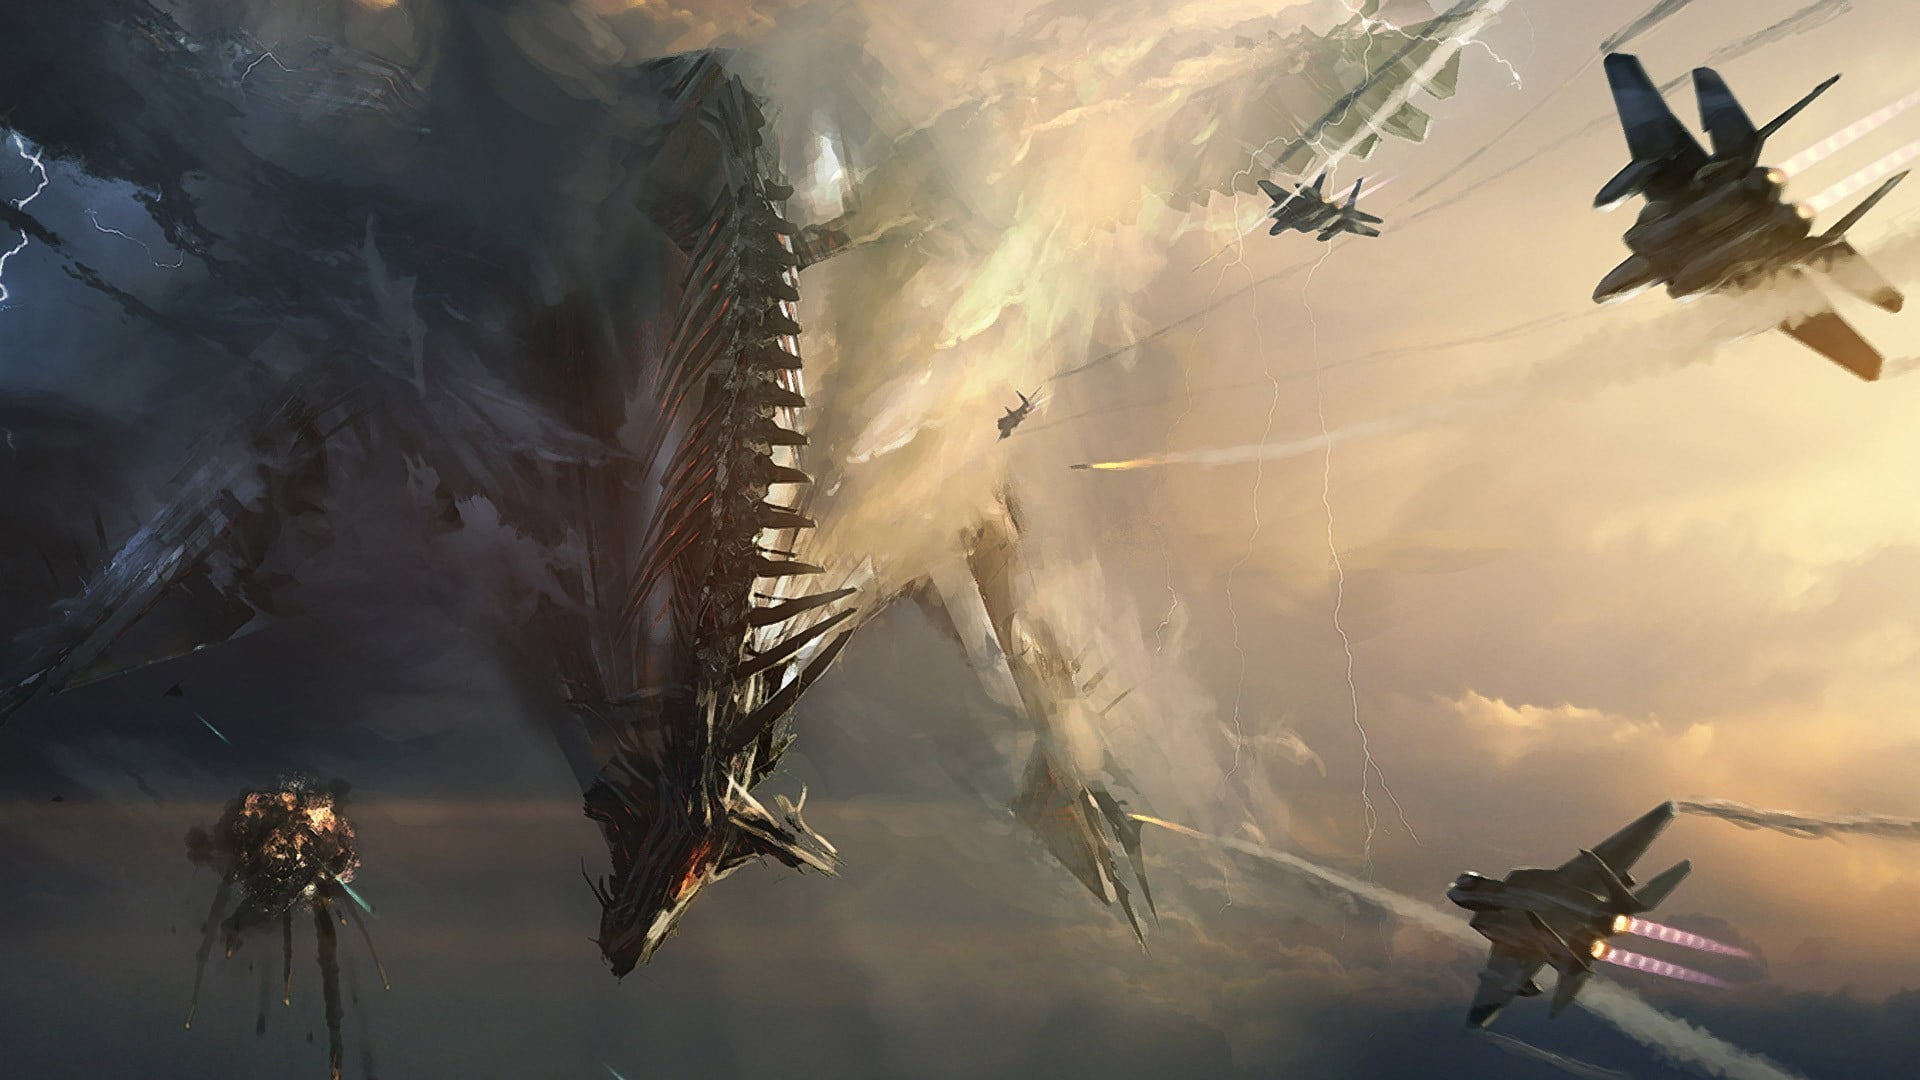 dragon and fighter jet poster, artwork, fantasy art, dragon, jets